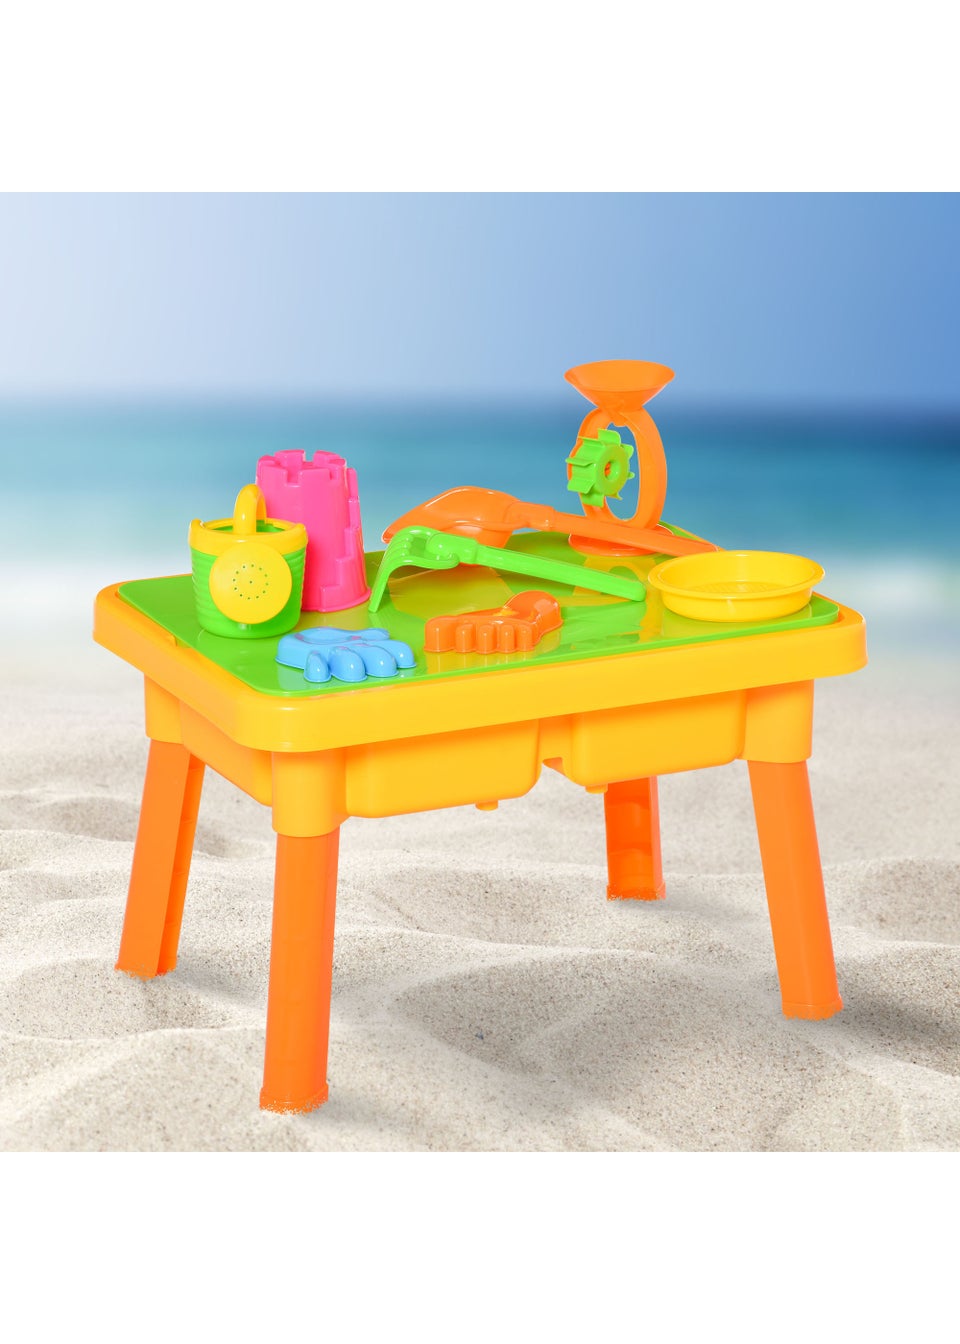 HOMCOM 16 Piece Sand & Water Outdoor Activity Table (59cm x 42cm x 37cm)